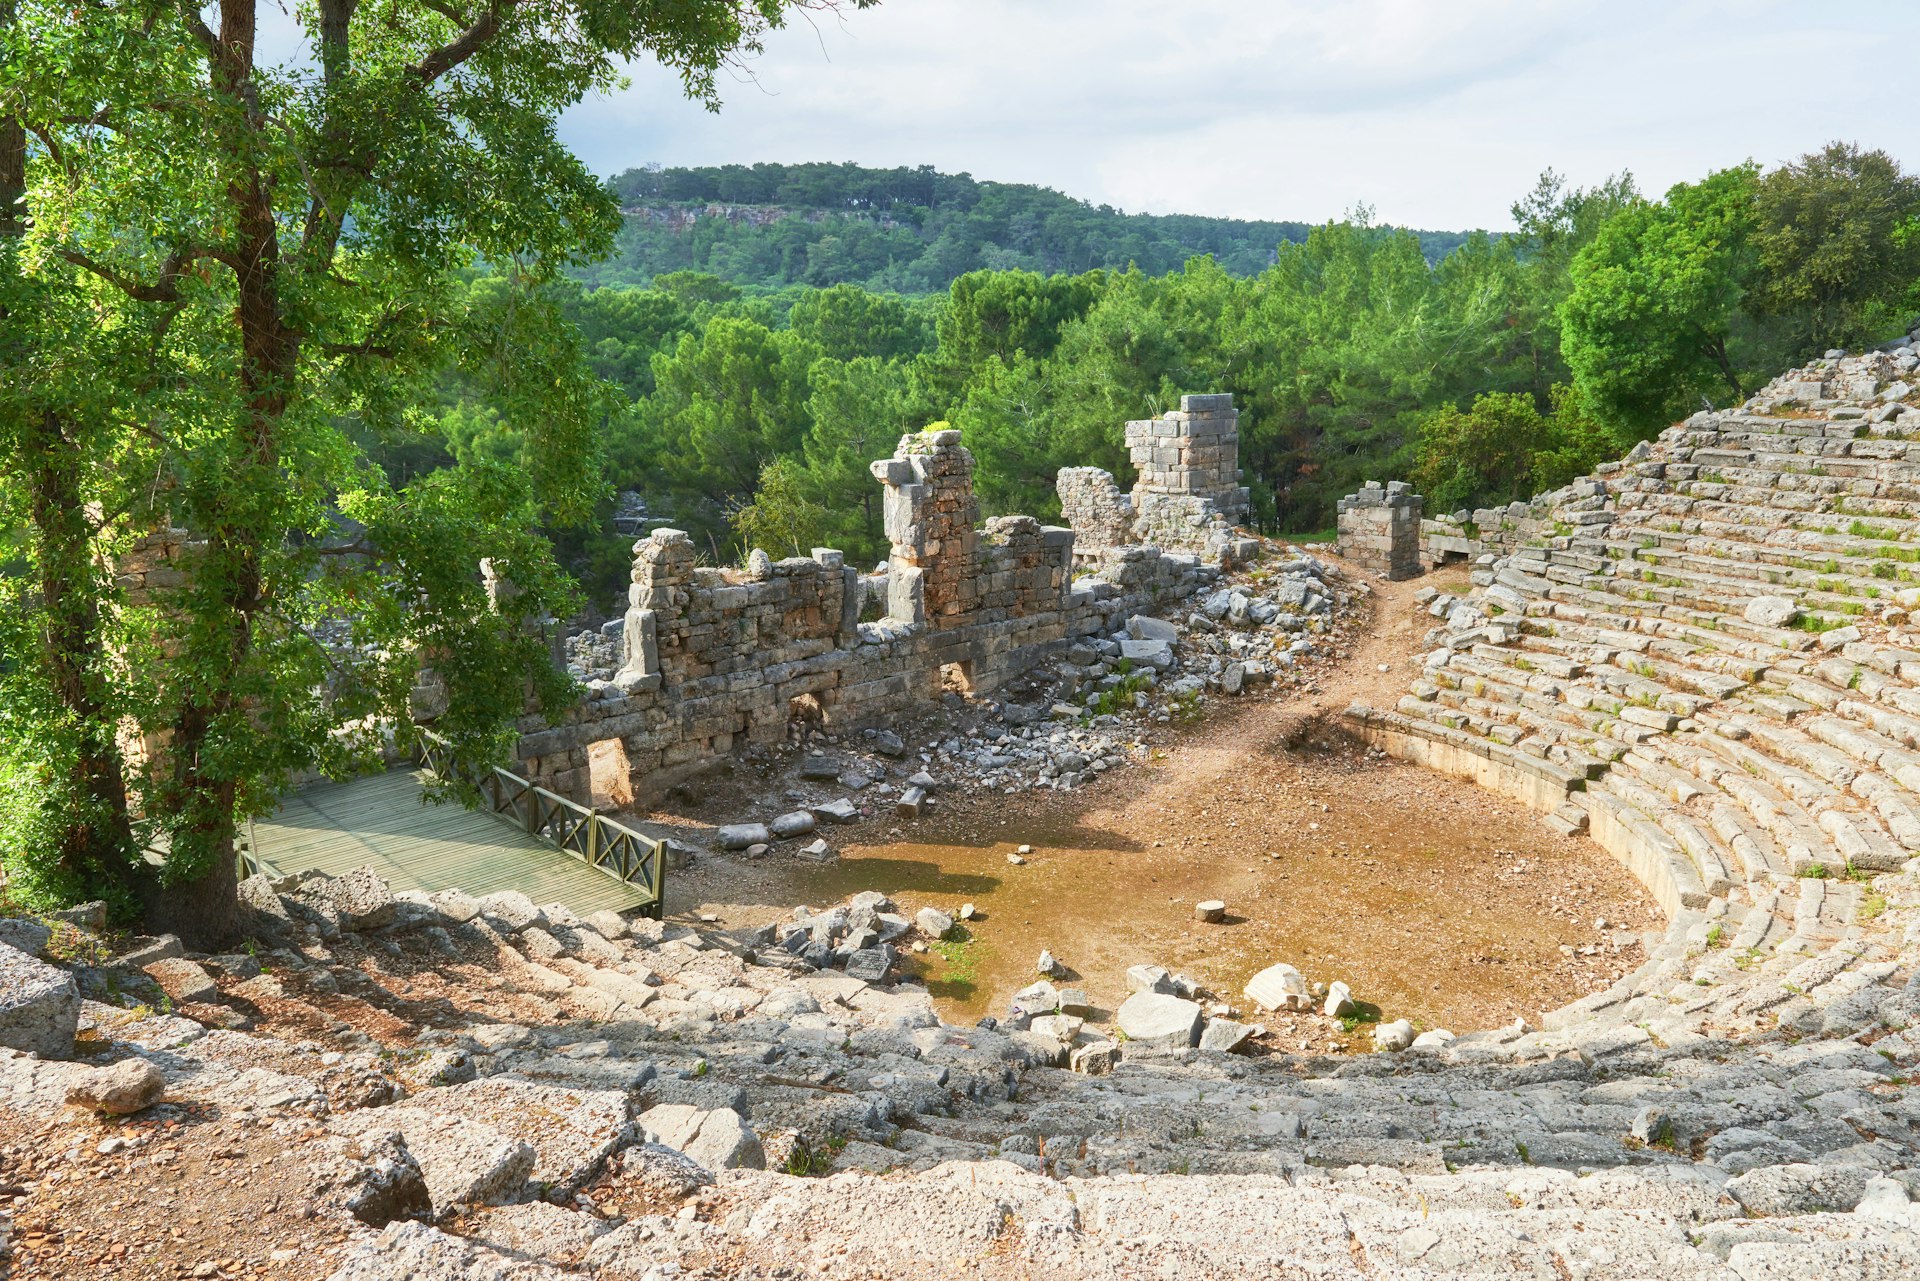 A semi-ruined amphitheater facing a crumbling stone wall